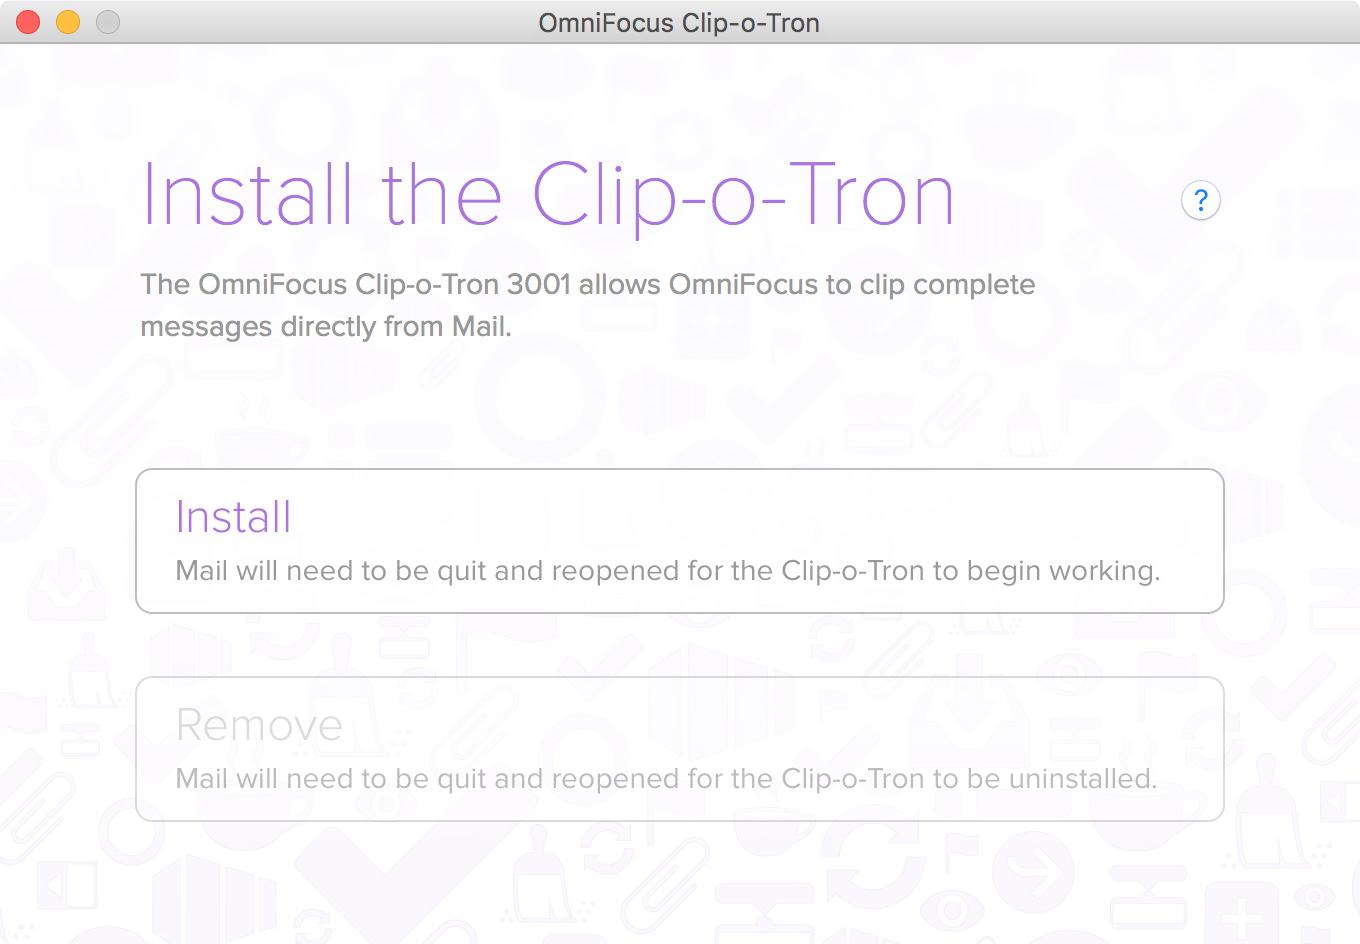 Installing the OmniFocus Clip-o-Tron